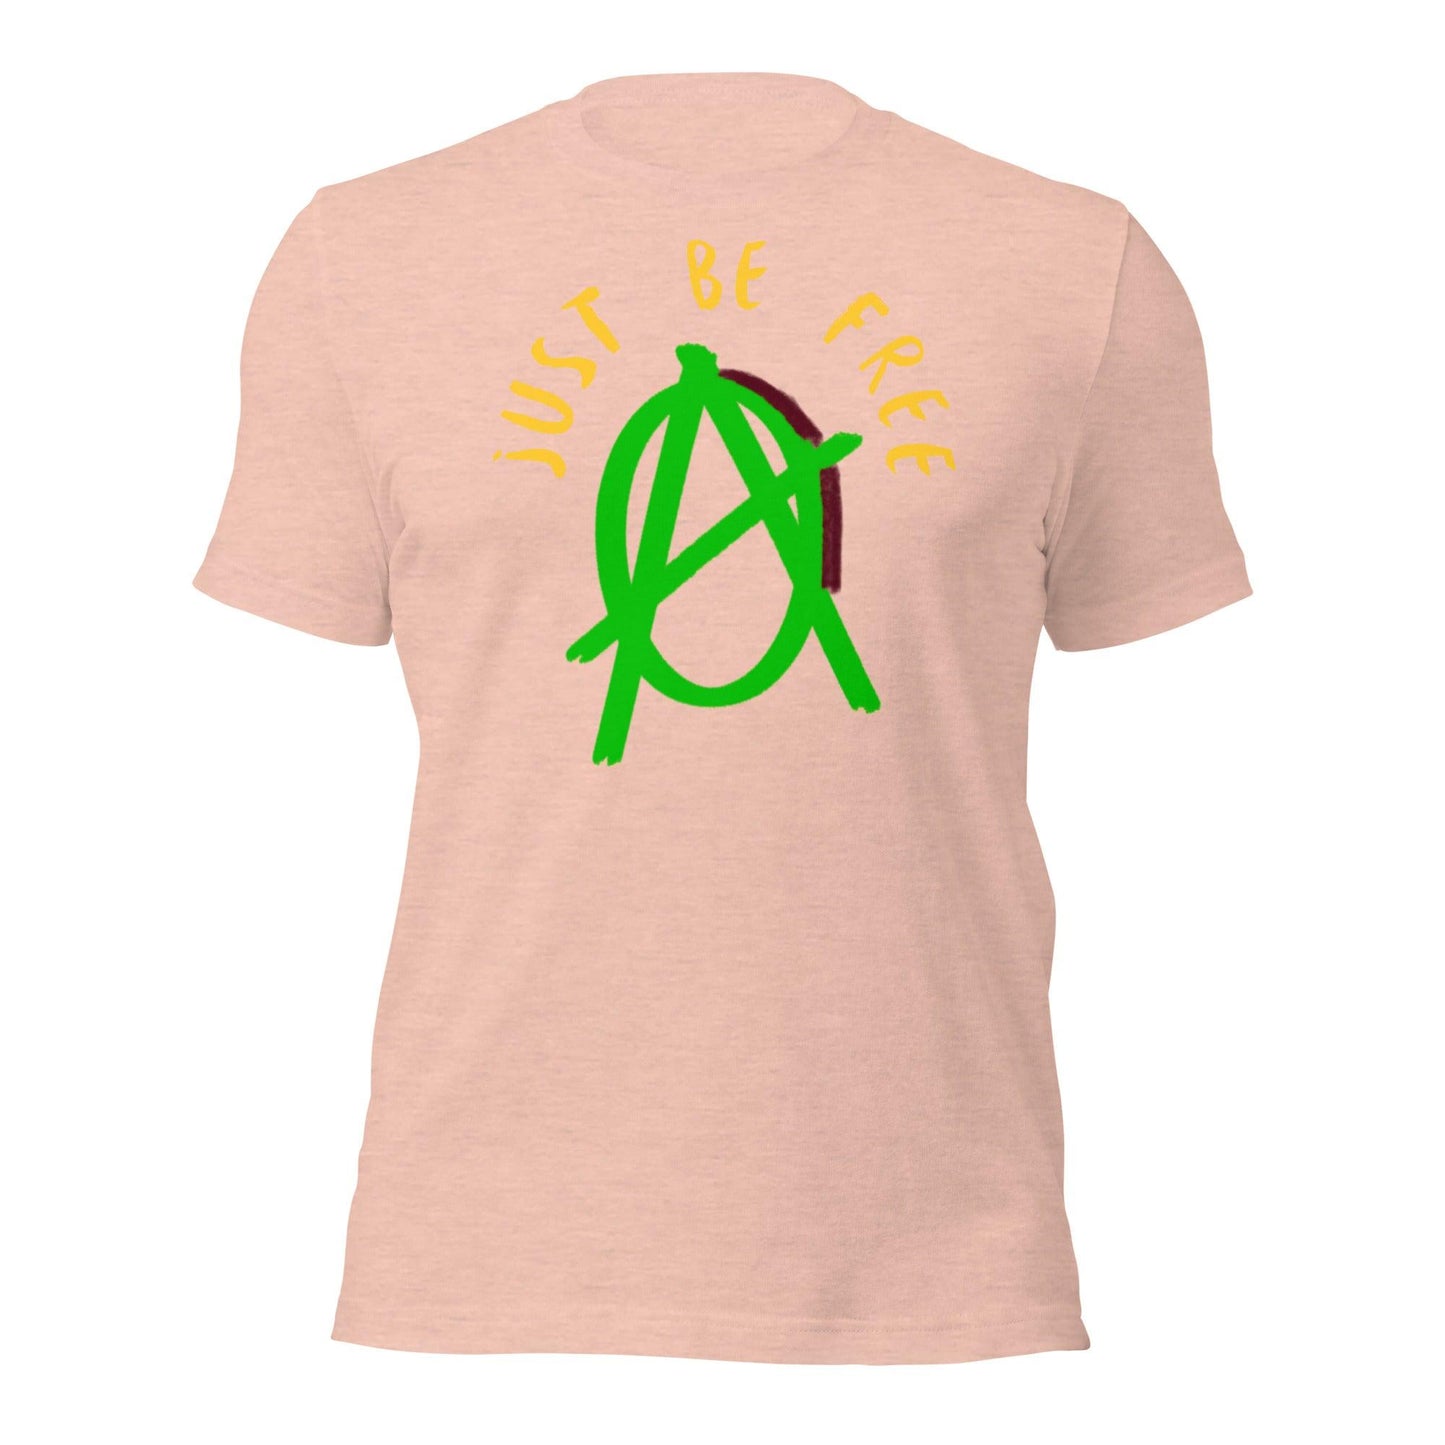 Anarchy Wear "Just Be Free" Green Pastels Unisex t-shirt - AnarchyWear